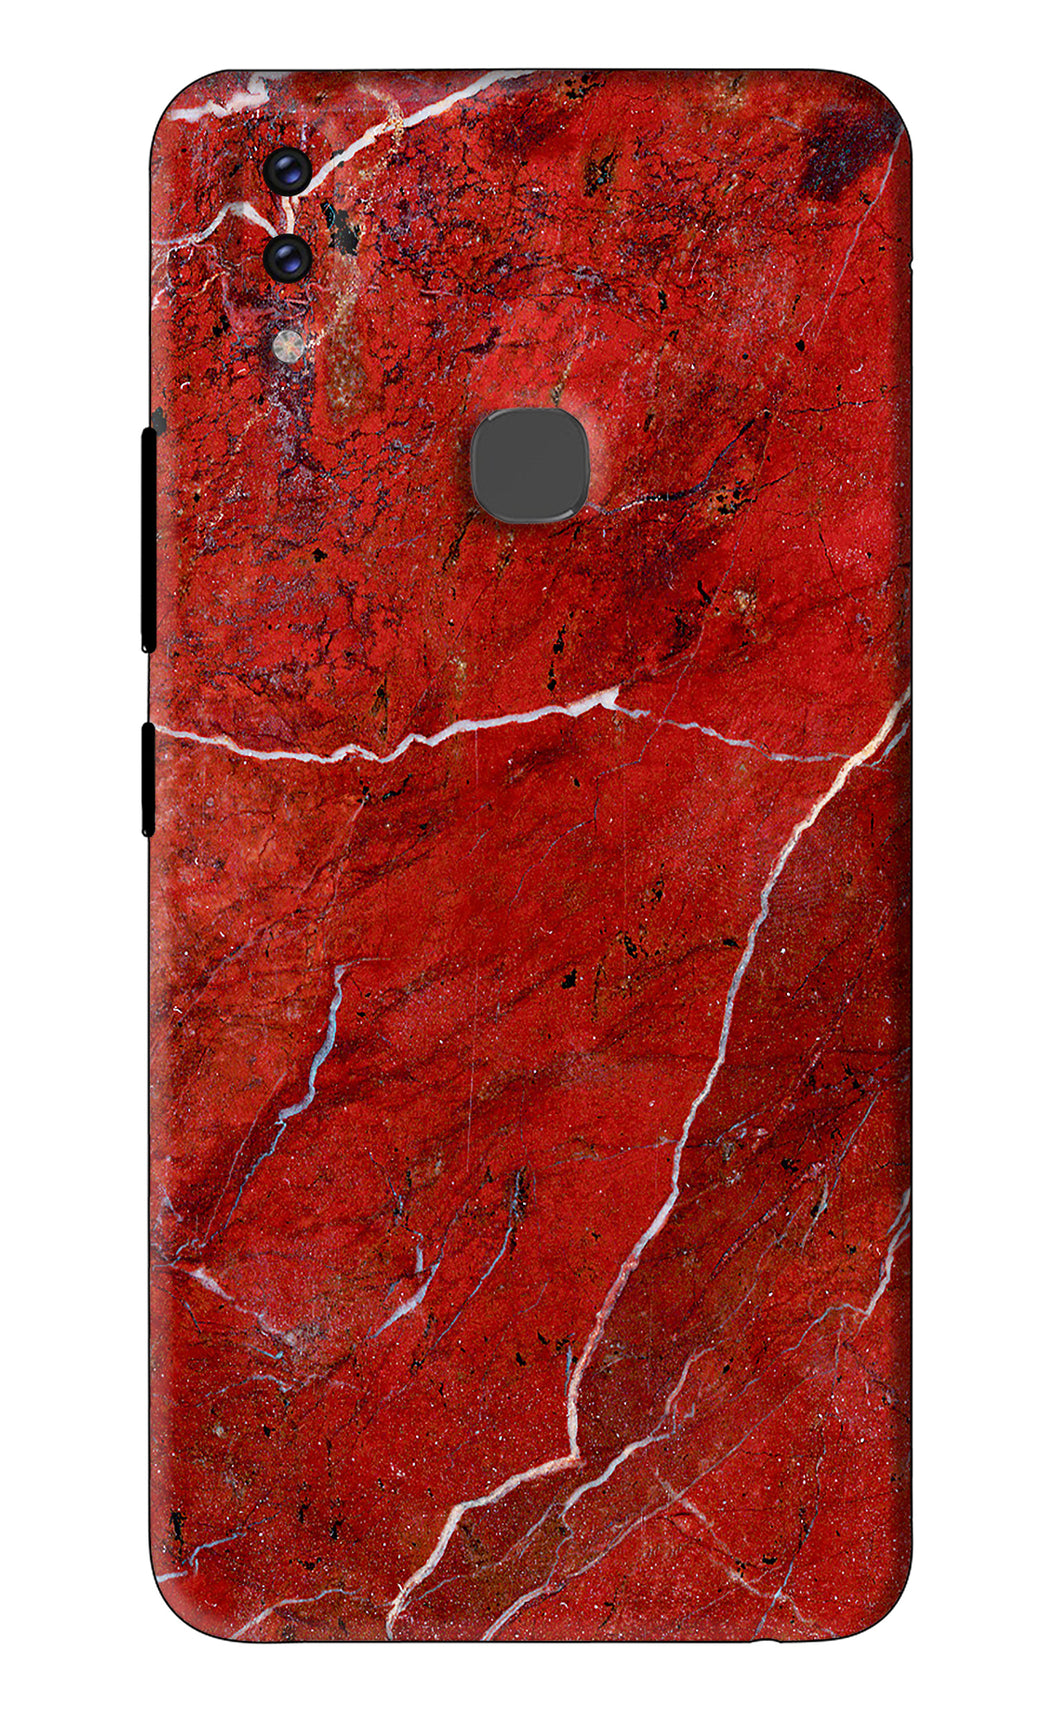 Red Marble Design Vivo V9 Back Skin Wrap